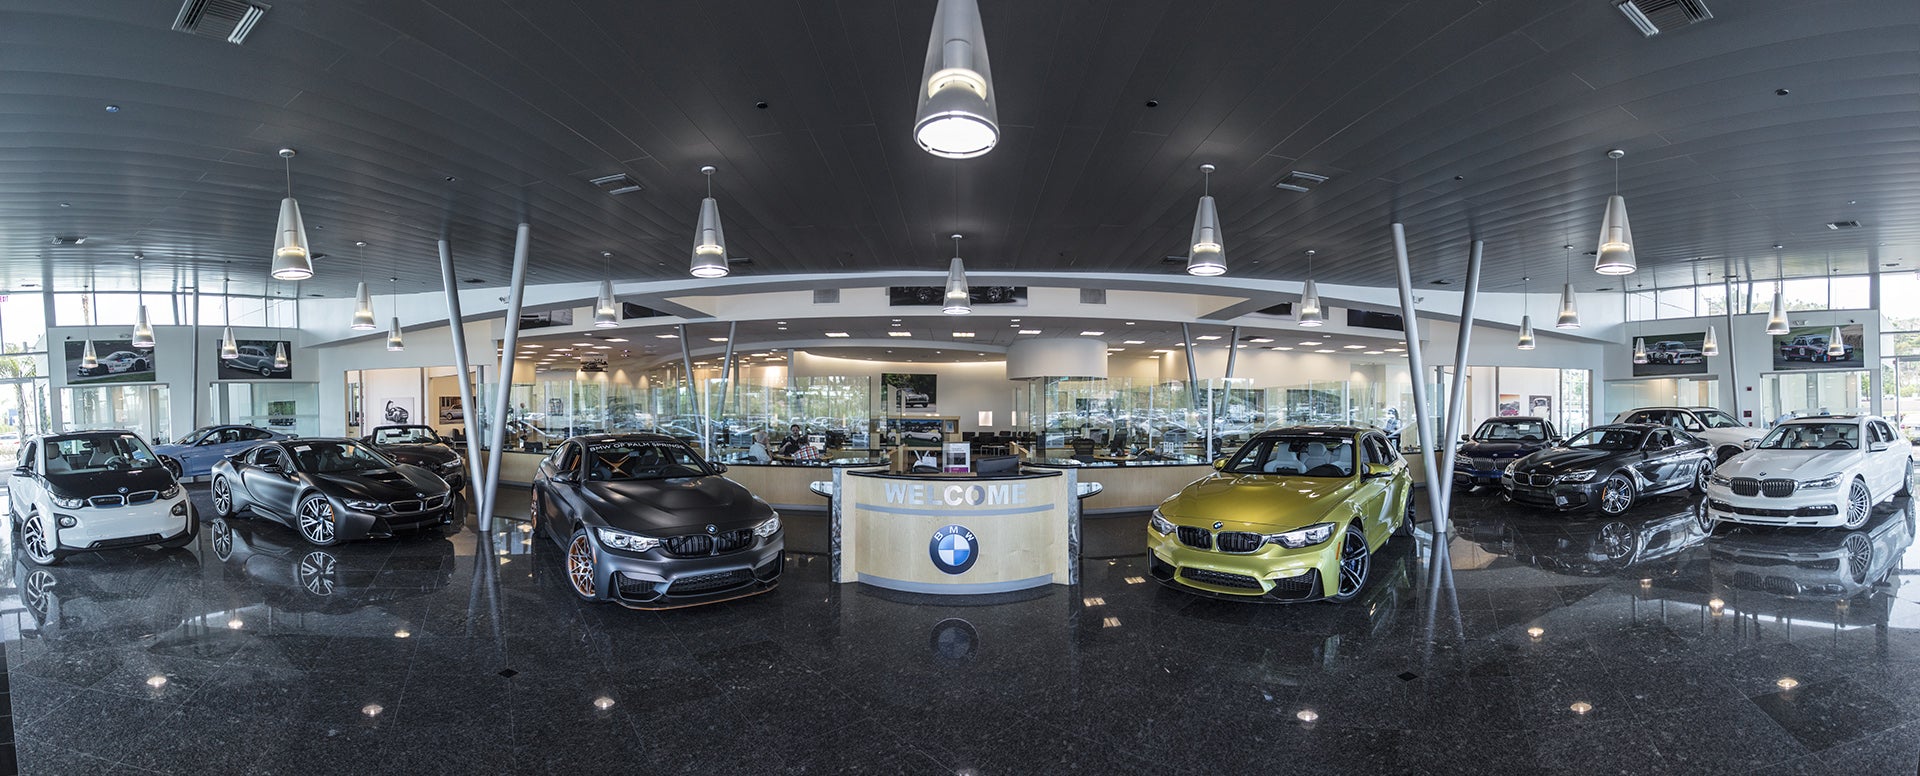 BMW of Palm Springs FAQs | Palm Springs, CA BMW Dealer